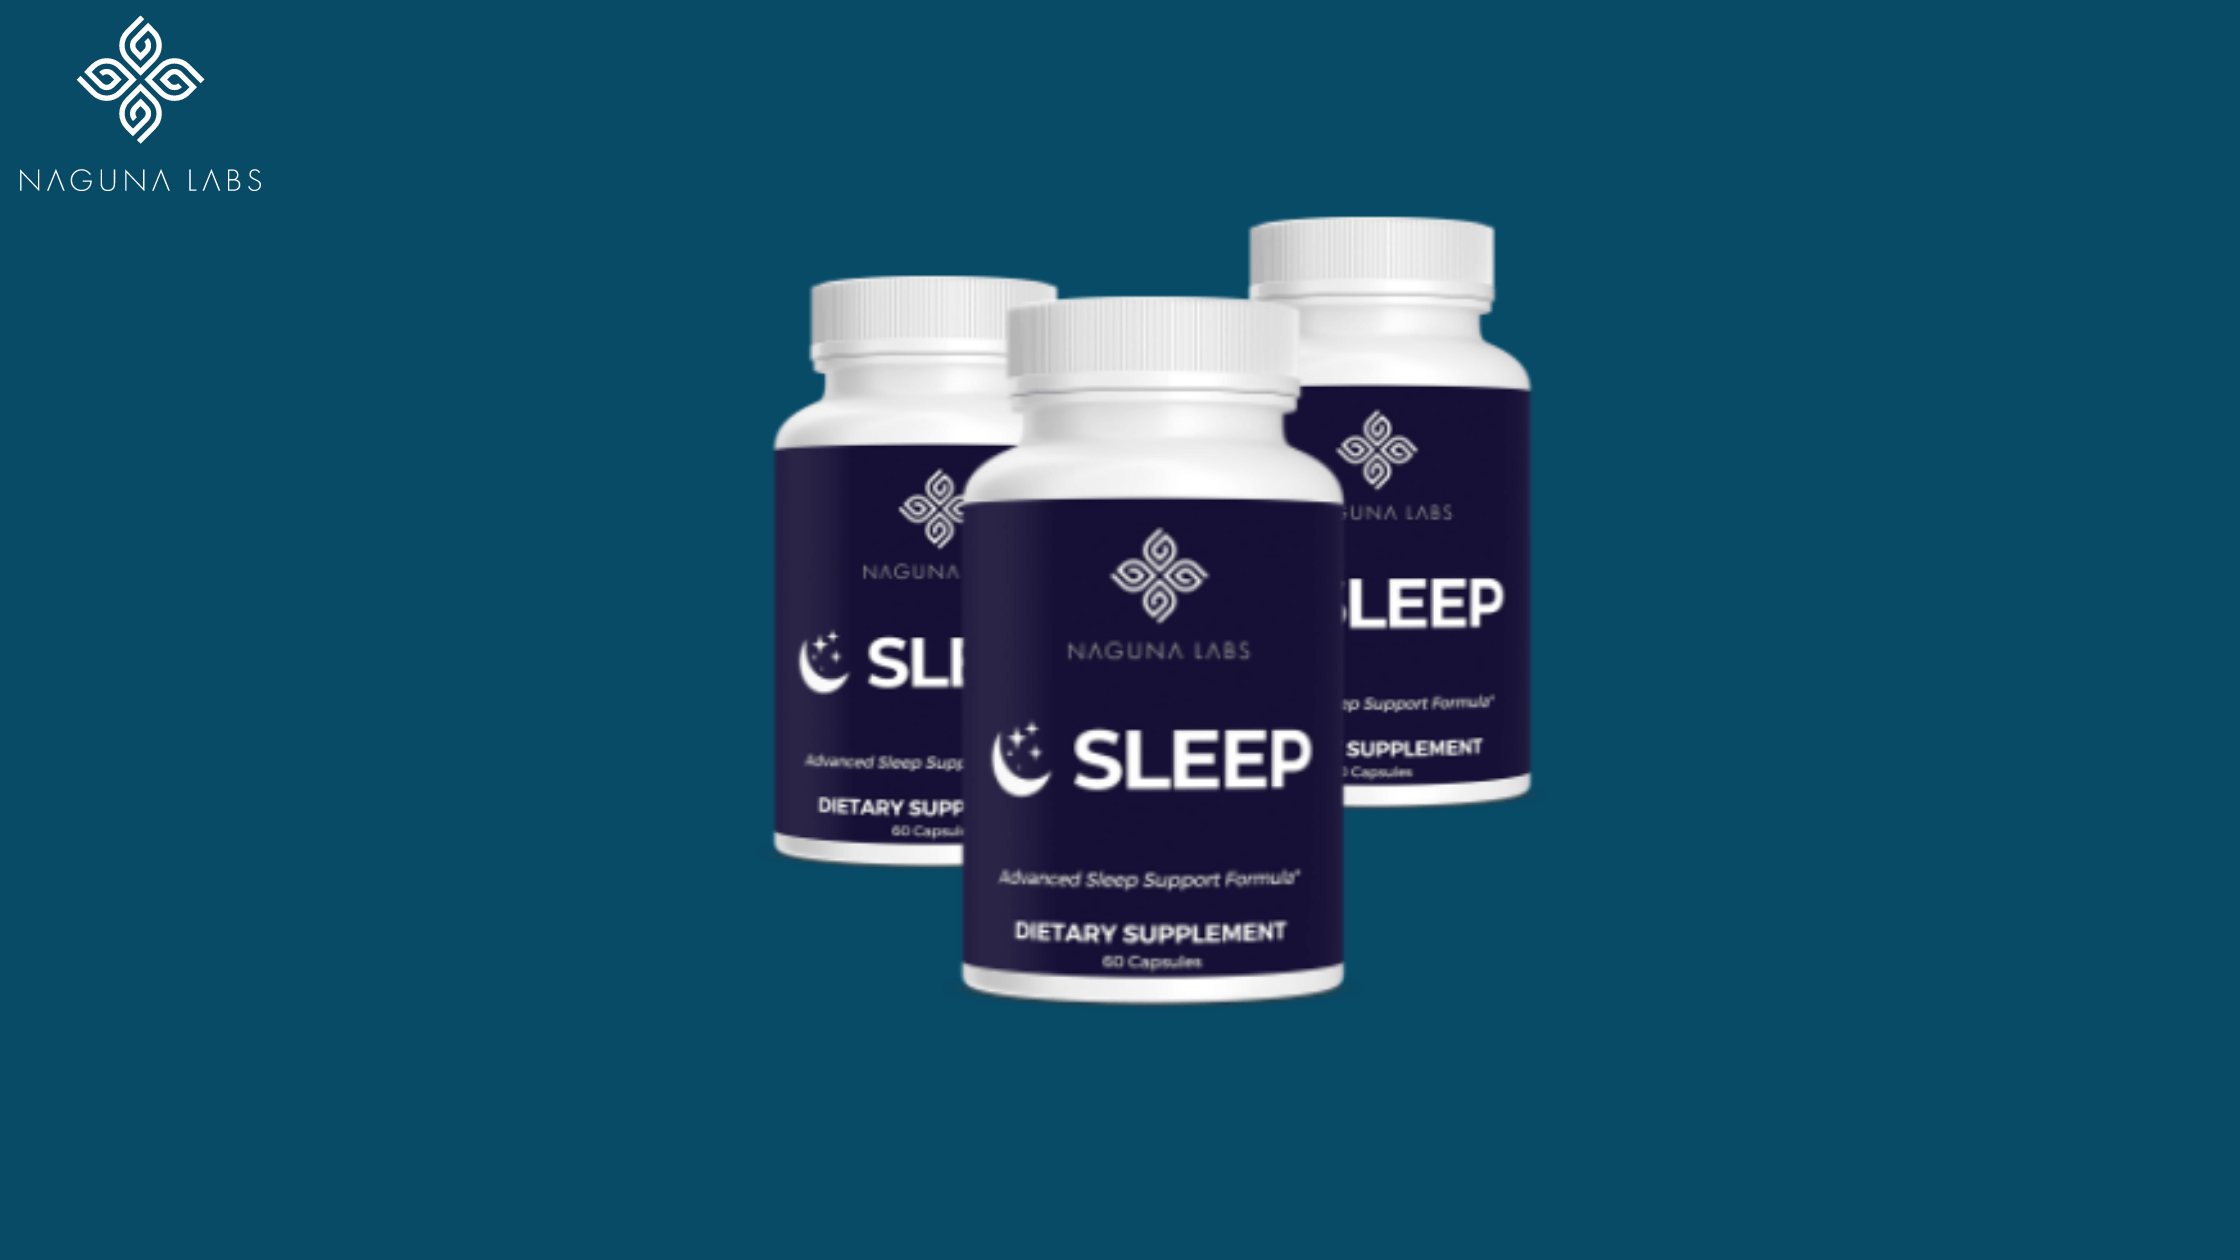 Naguna Labs Sleep supplement